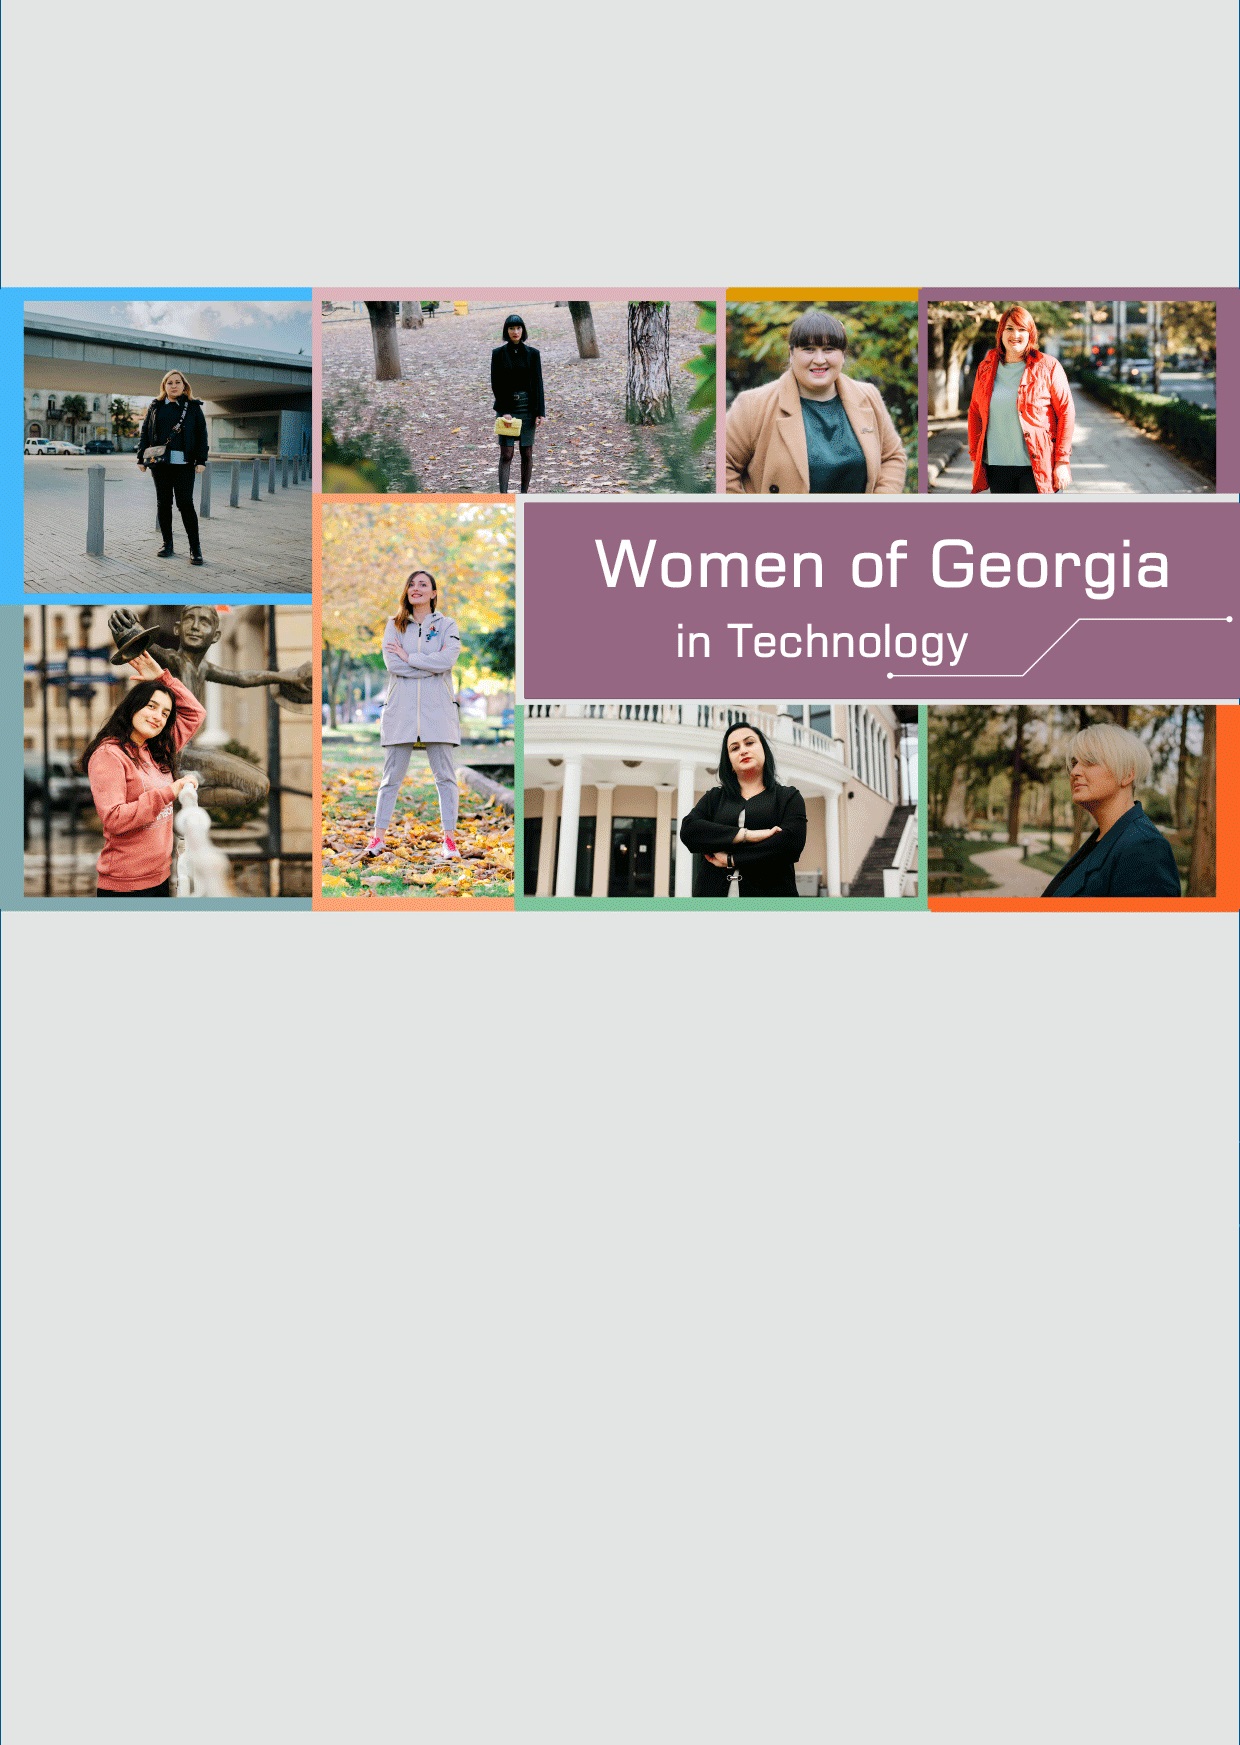 Women of Georgia in Technology. Photo: Women of Georgia